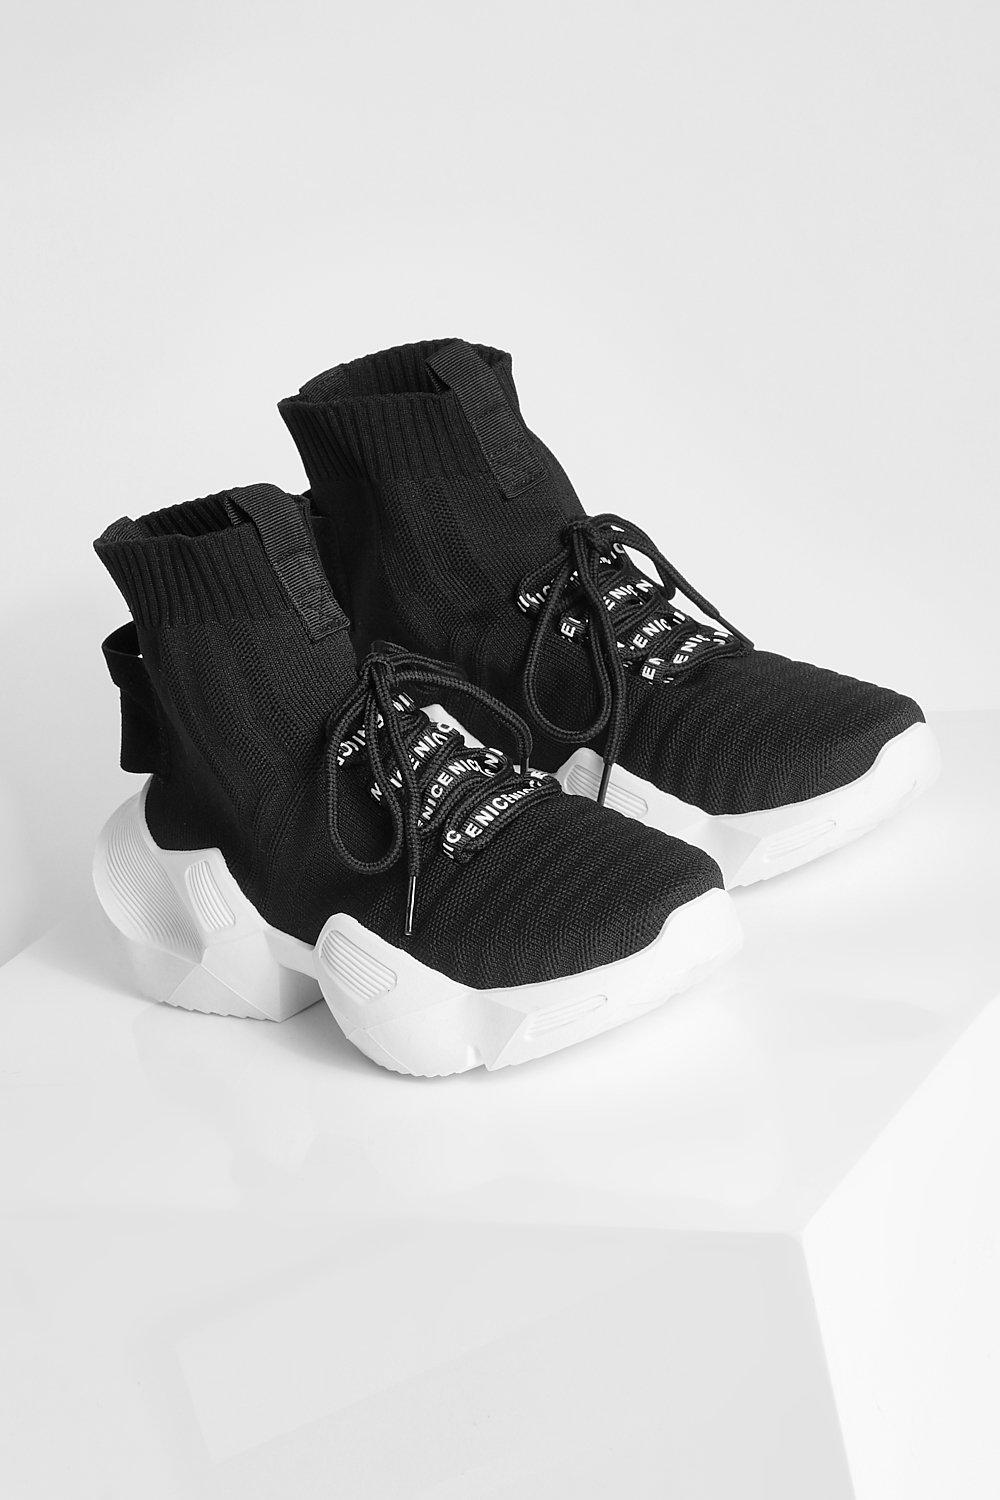 Zapatillas de deporte negras con cordones para mujer, zapatillas deportivas  de skate de tela para exteriores, Mode de Mujer